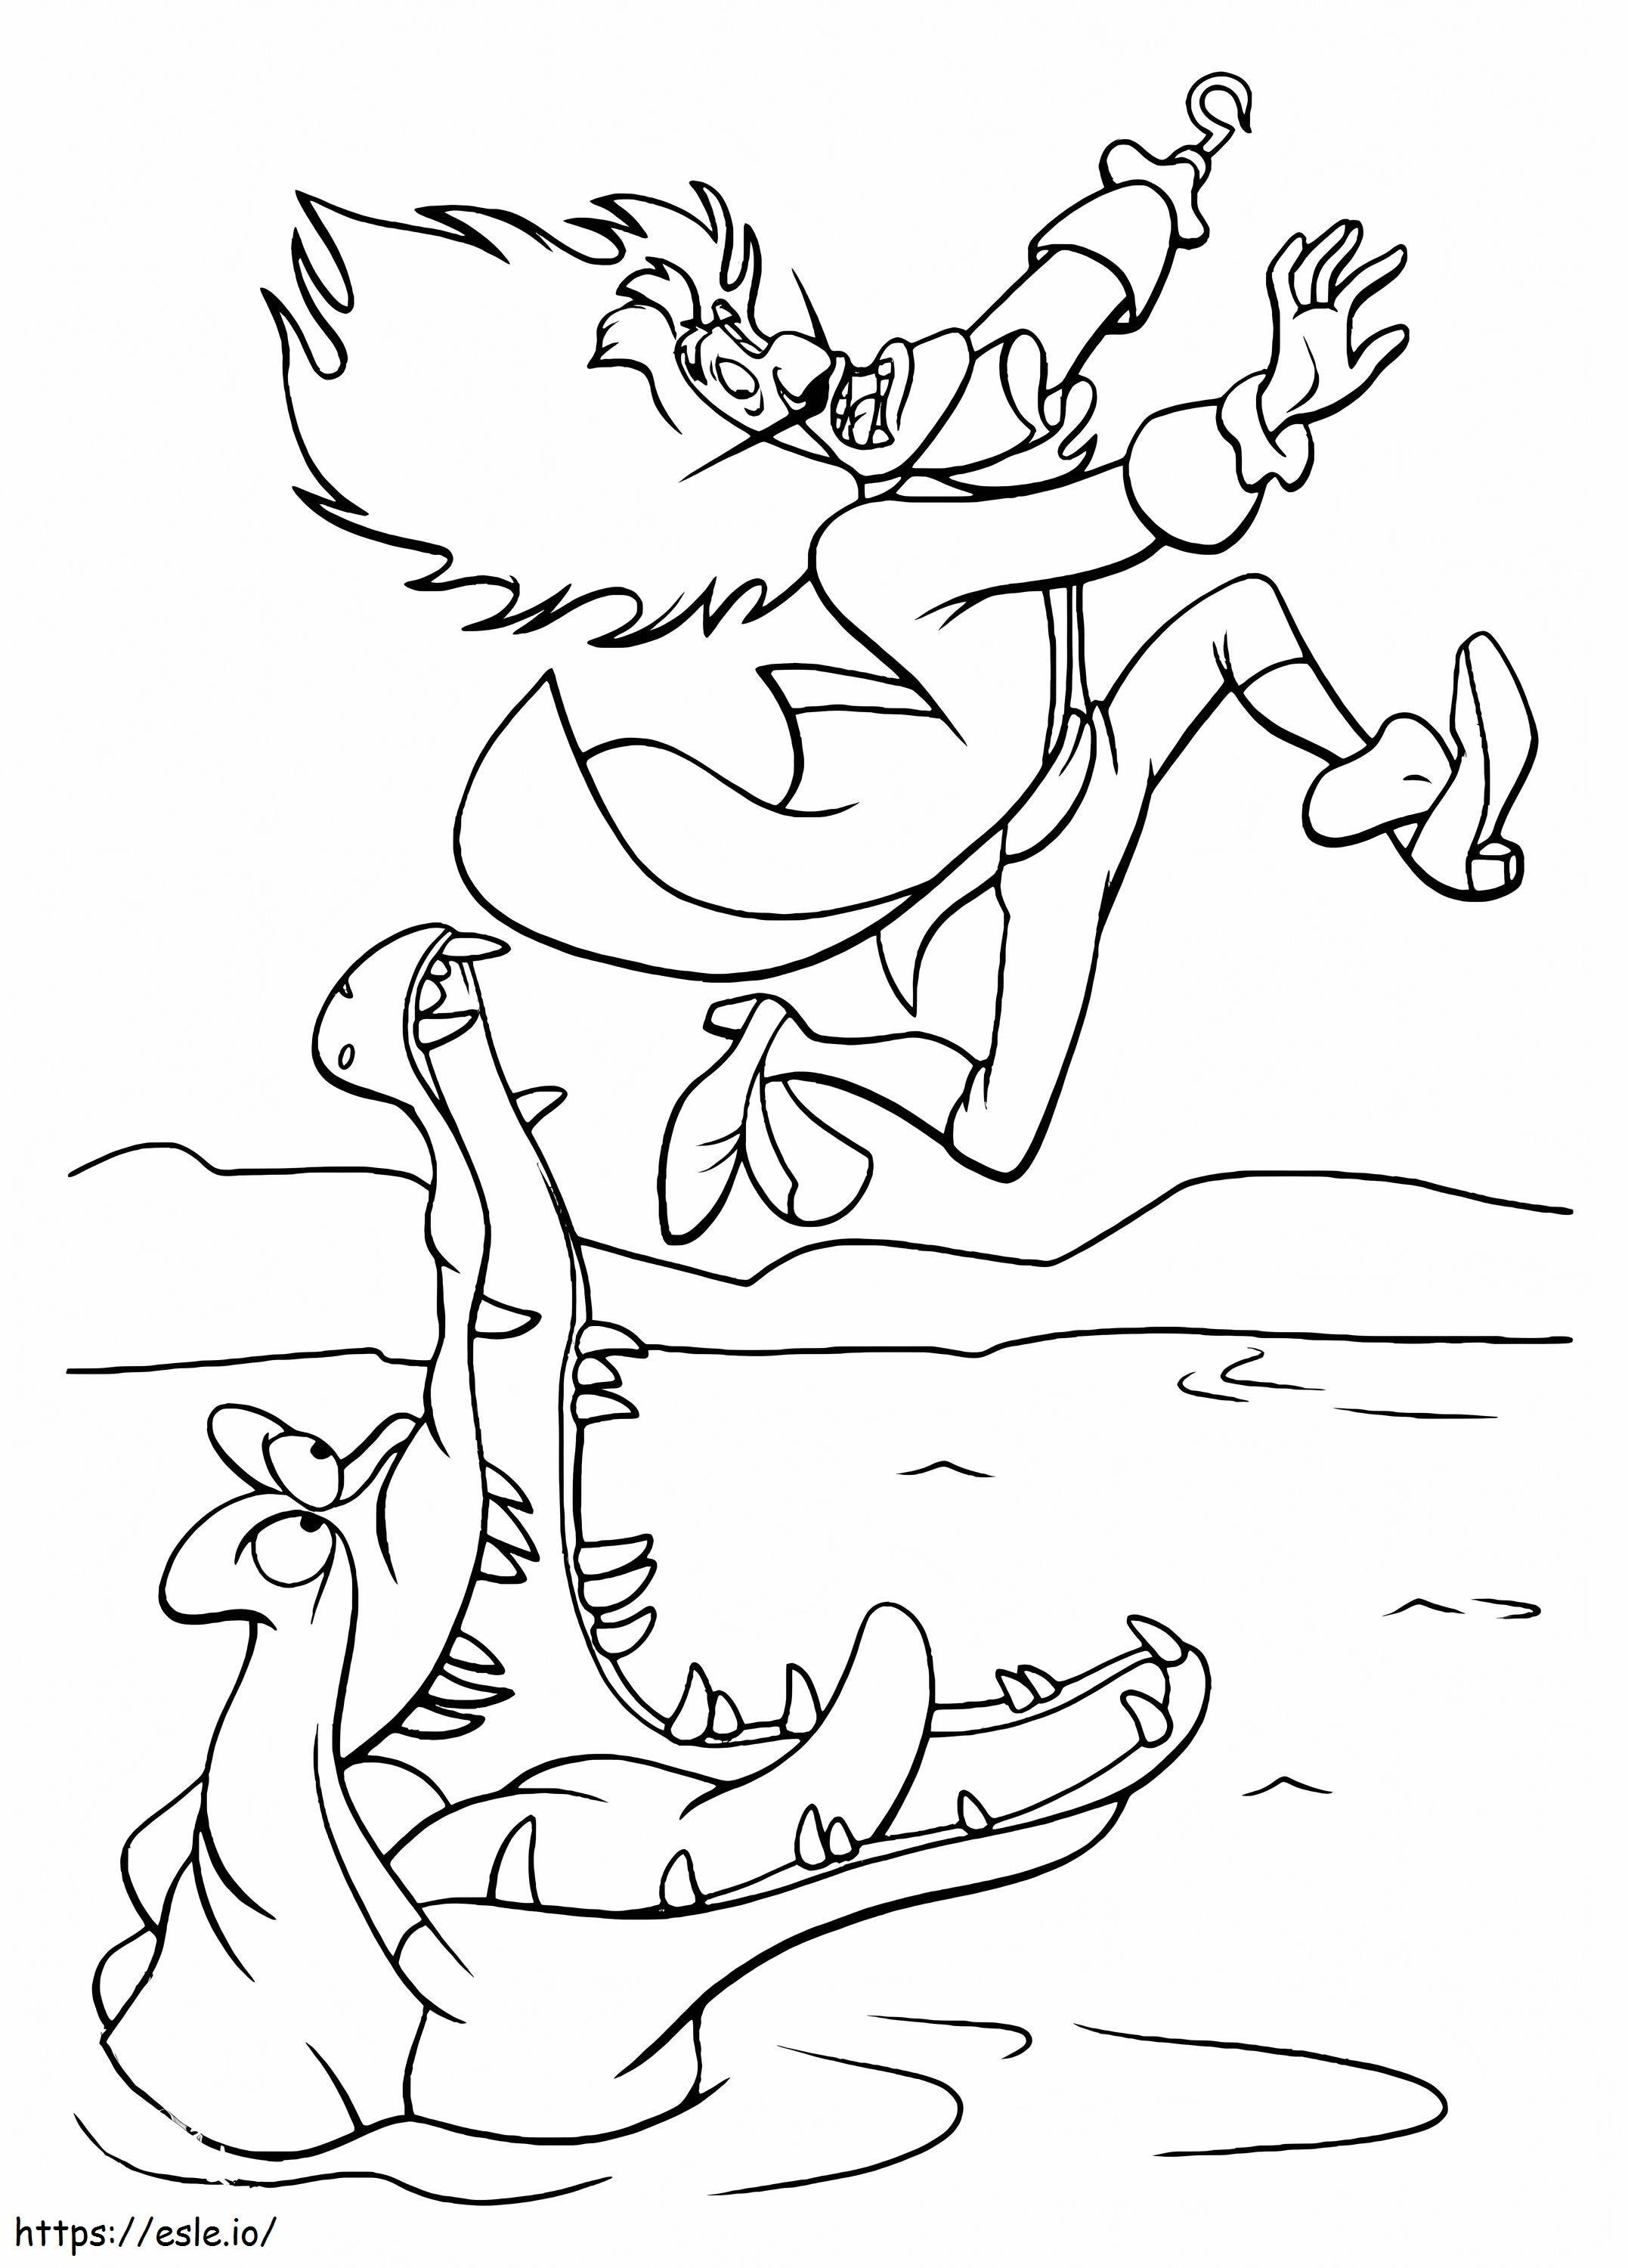 Crocodile Bites Captain Hook coloring page